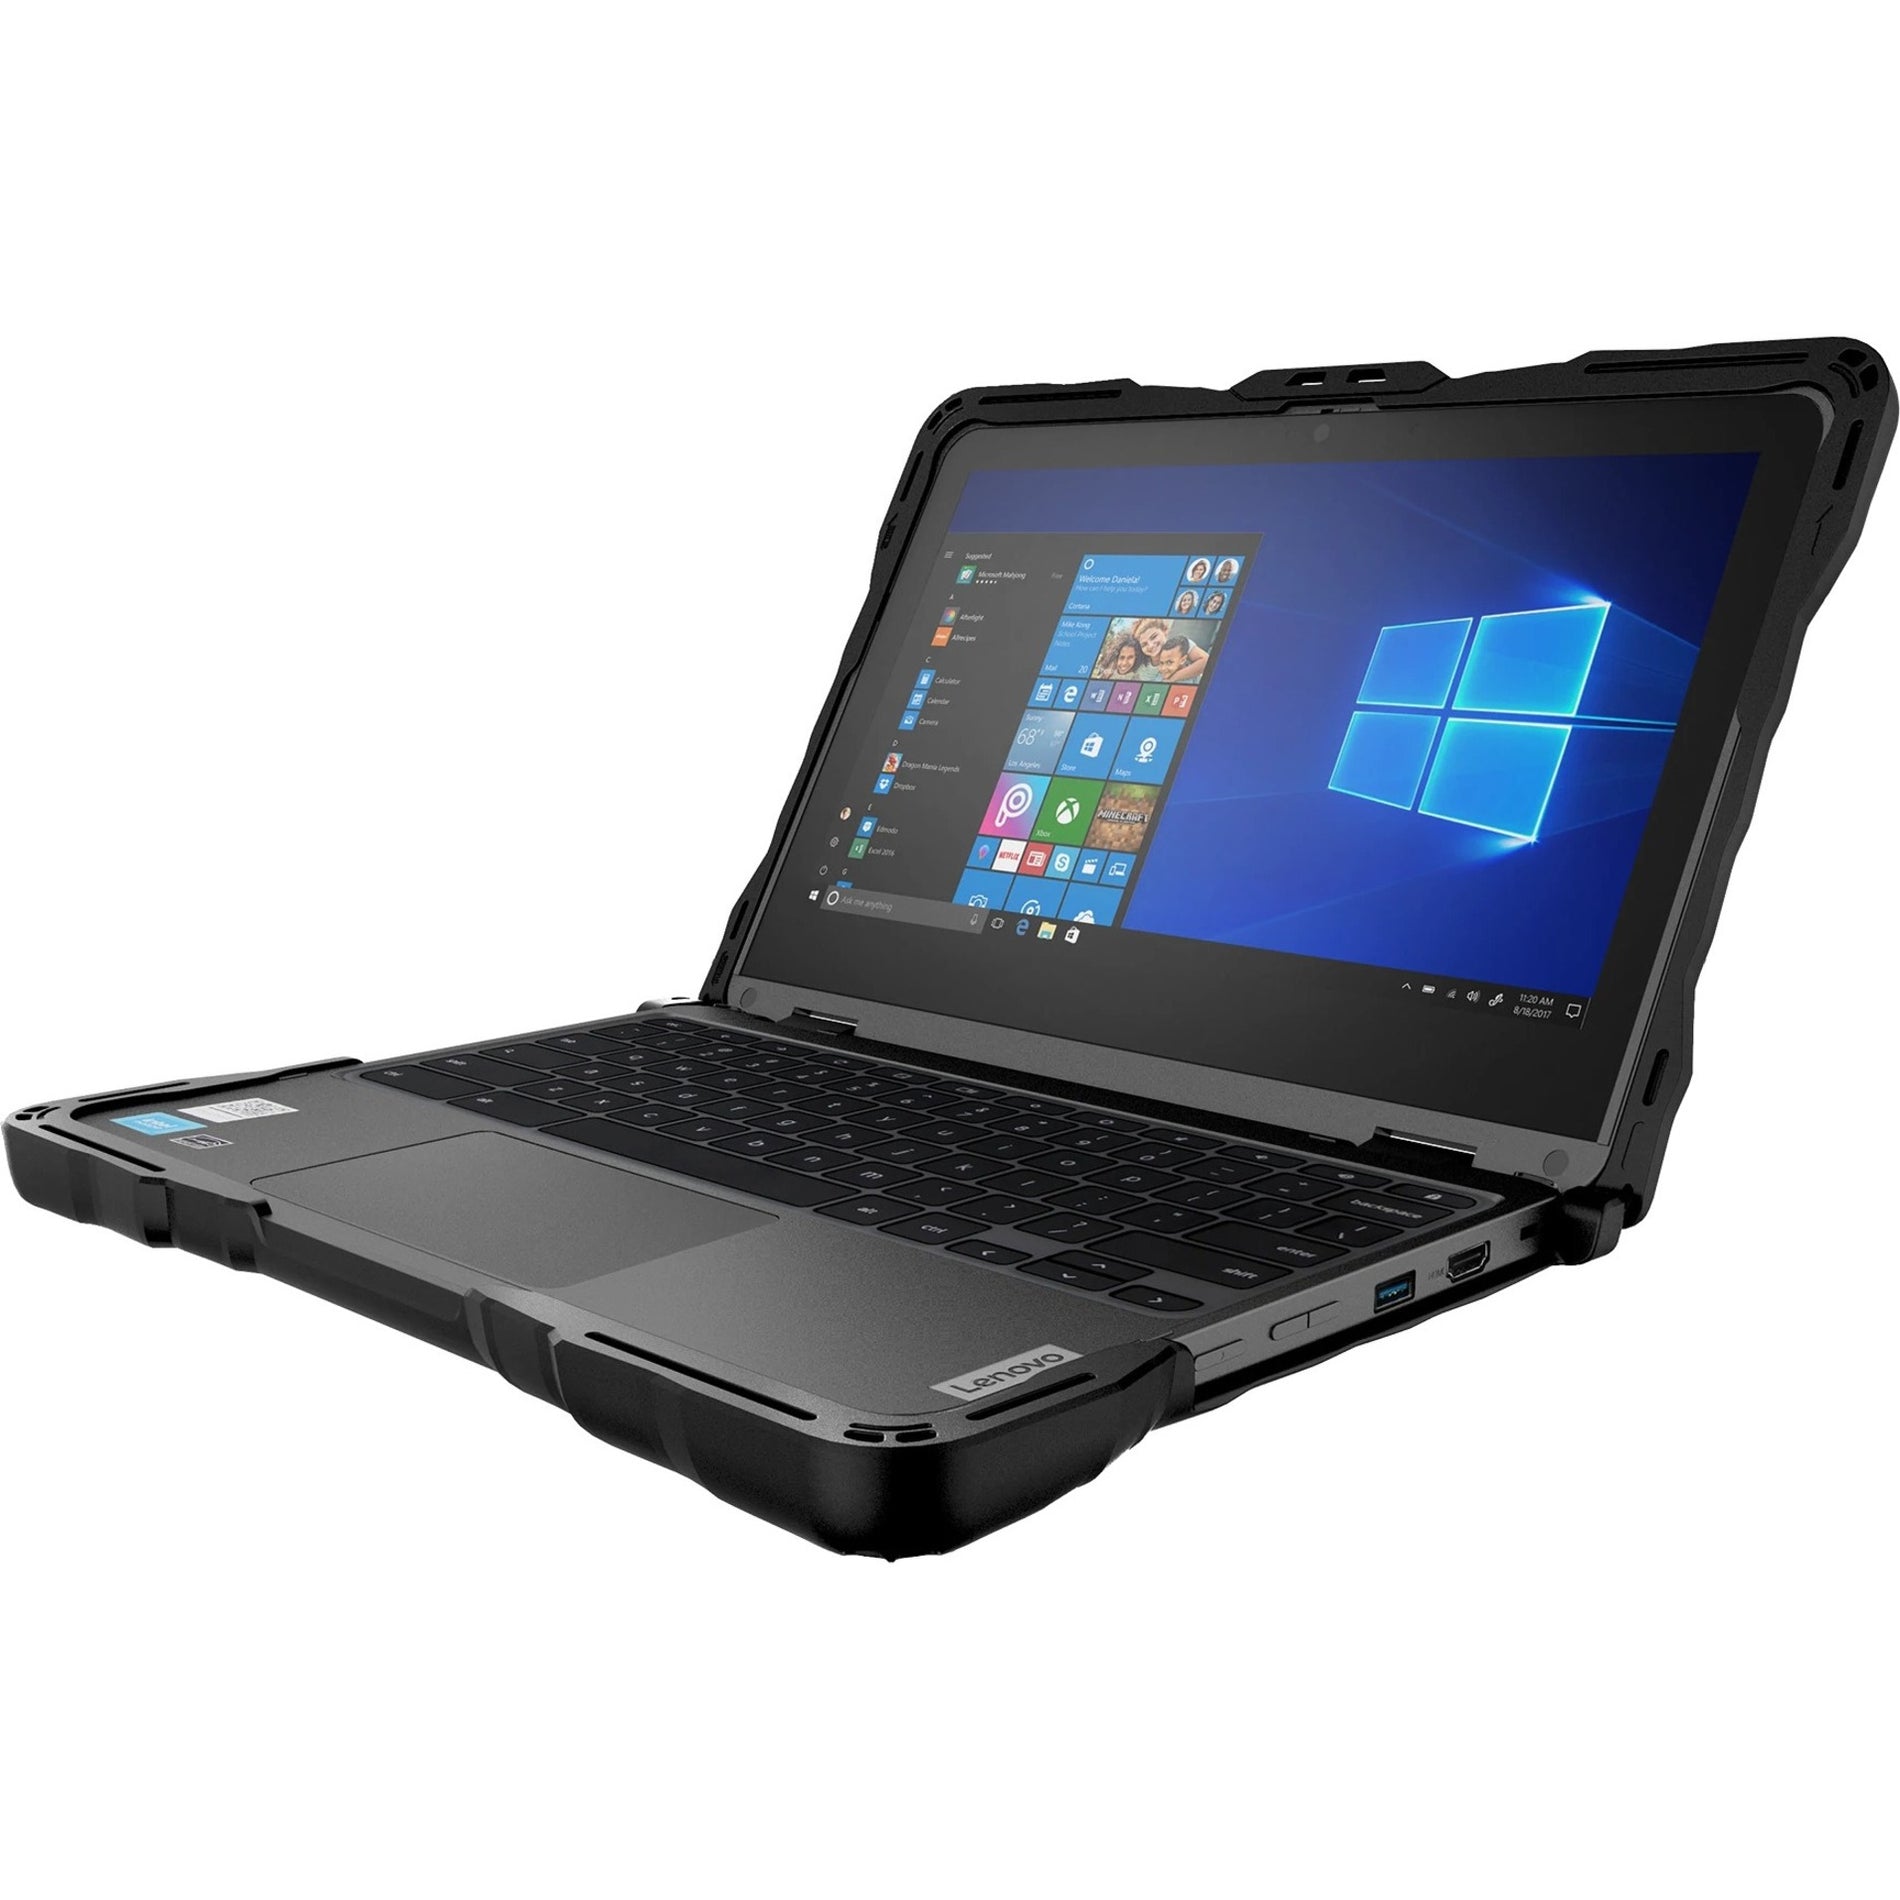 Gumdrop 01L010 DropTech for Lenovo 500e/500w/300e/300w Chromebook 3rd Gen (2-in-1), Shockproof Case, Black